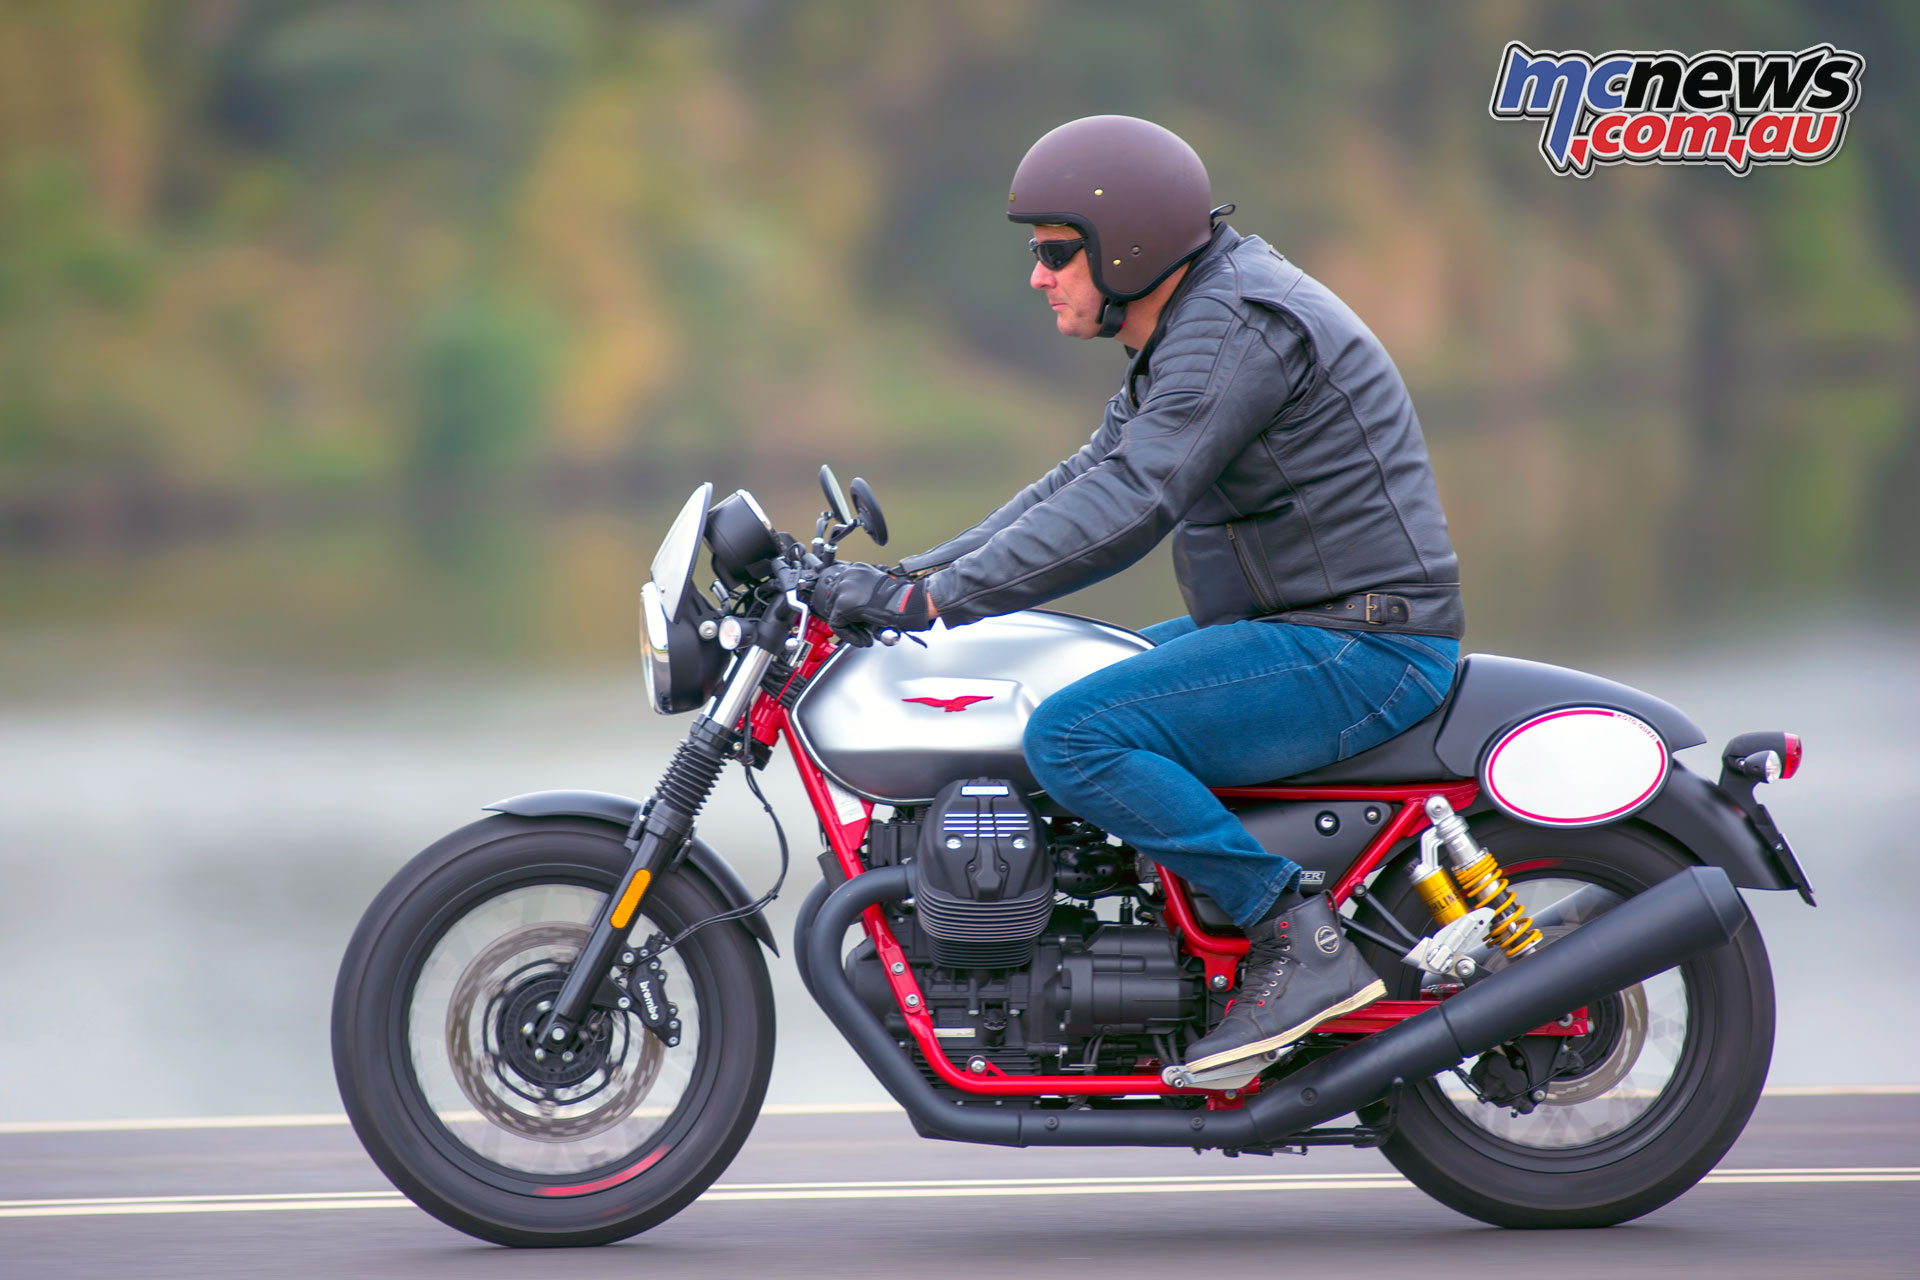 Moto Guzzi V7 III Racer Review | Motorcycle Tests | MCNews.com.au